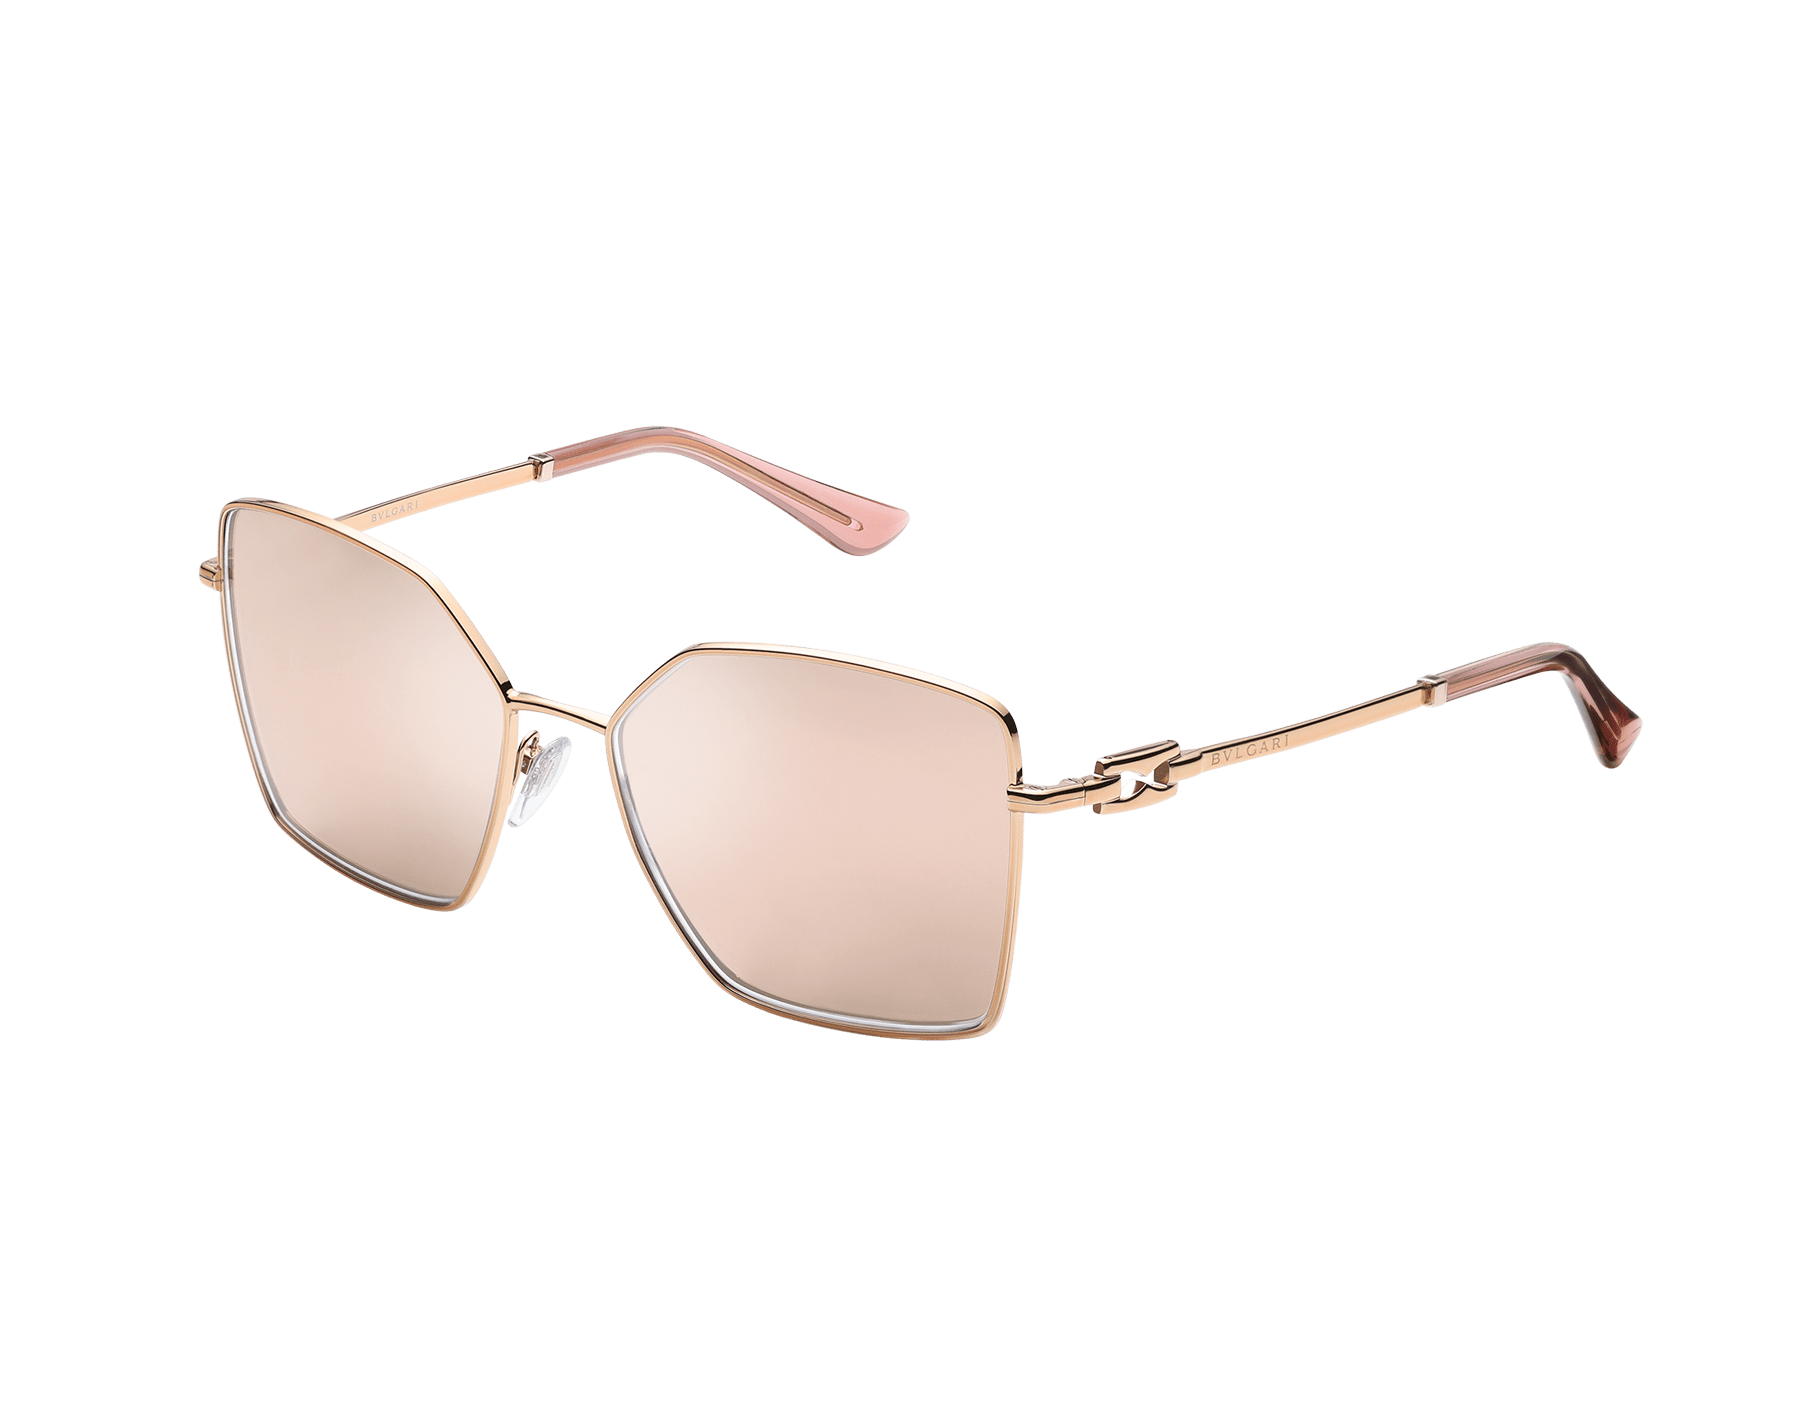 B.zero1 squared metal sunglasses 904134 image 1